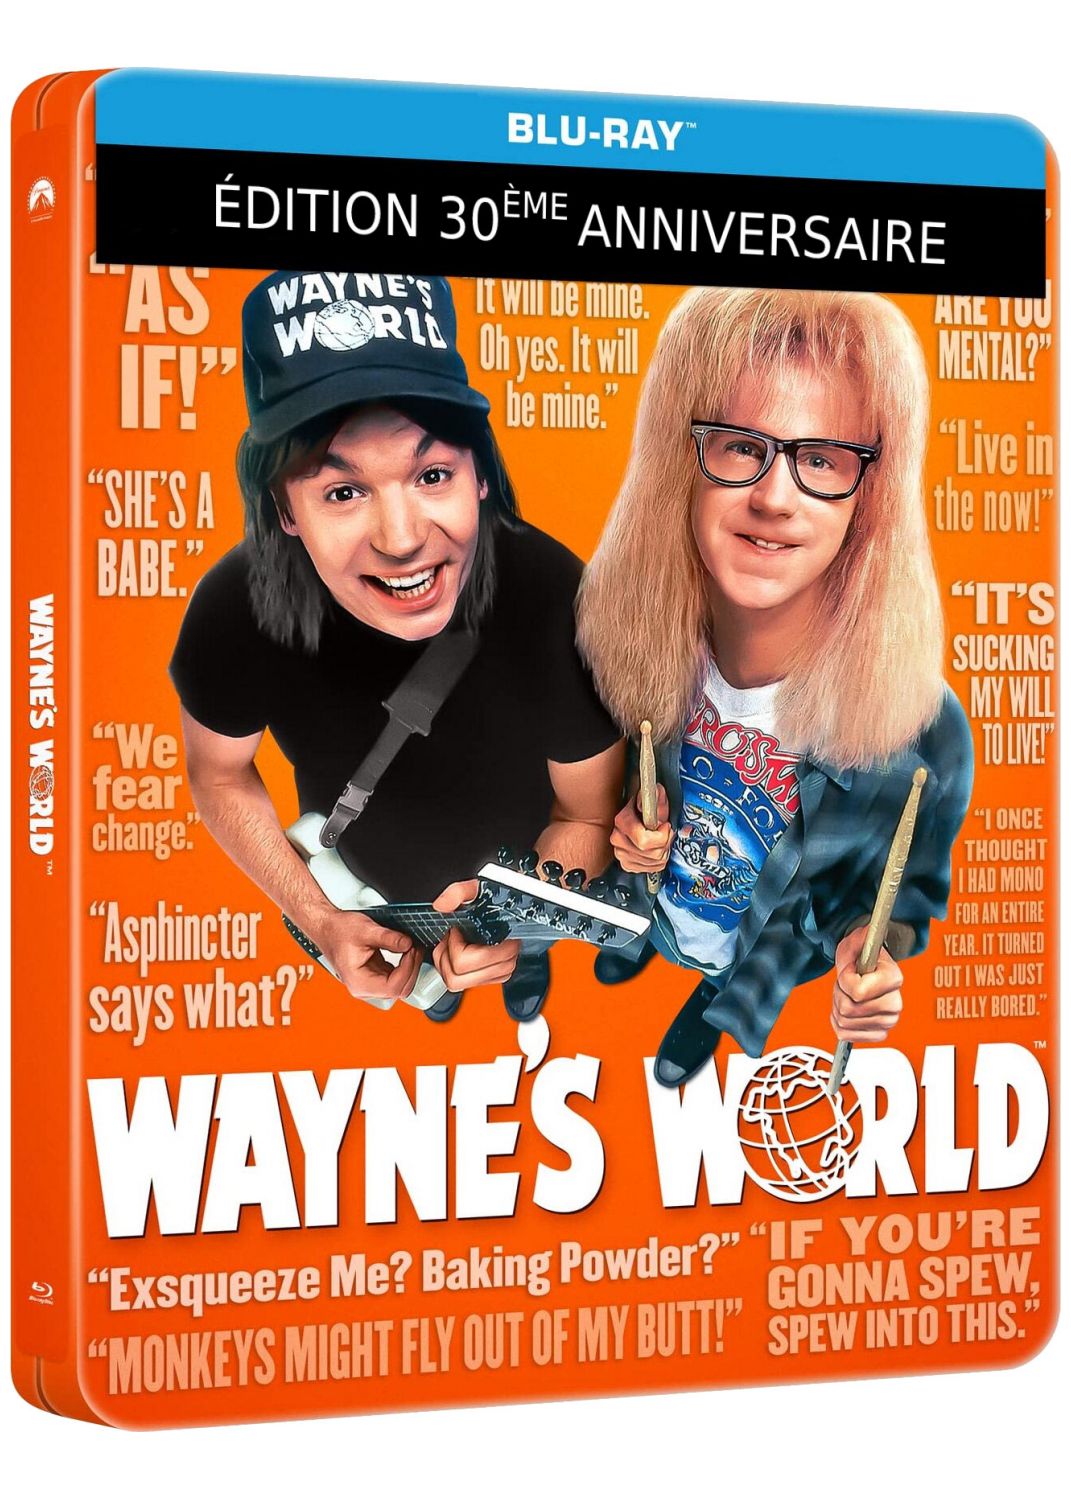 Wayne's World [Blu-Ray]